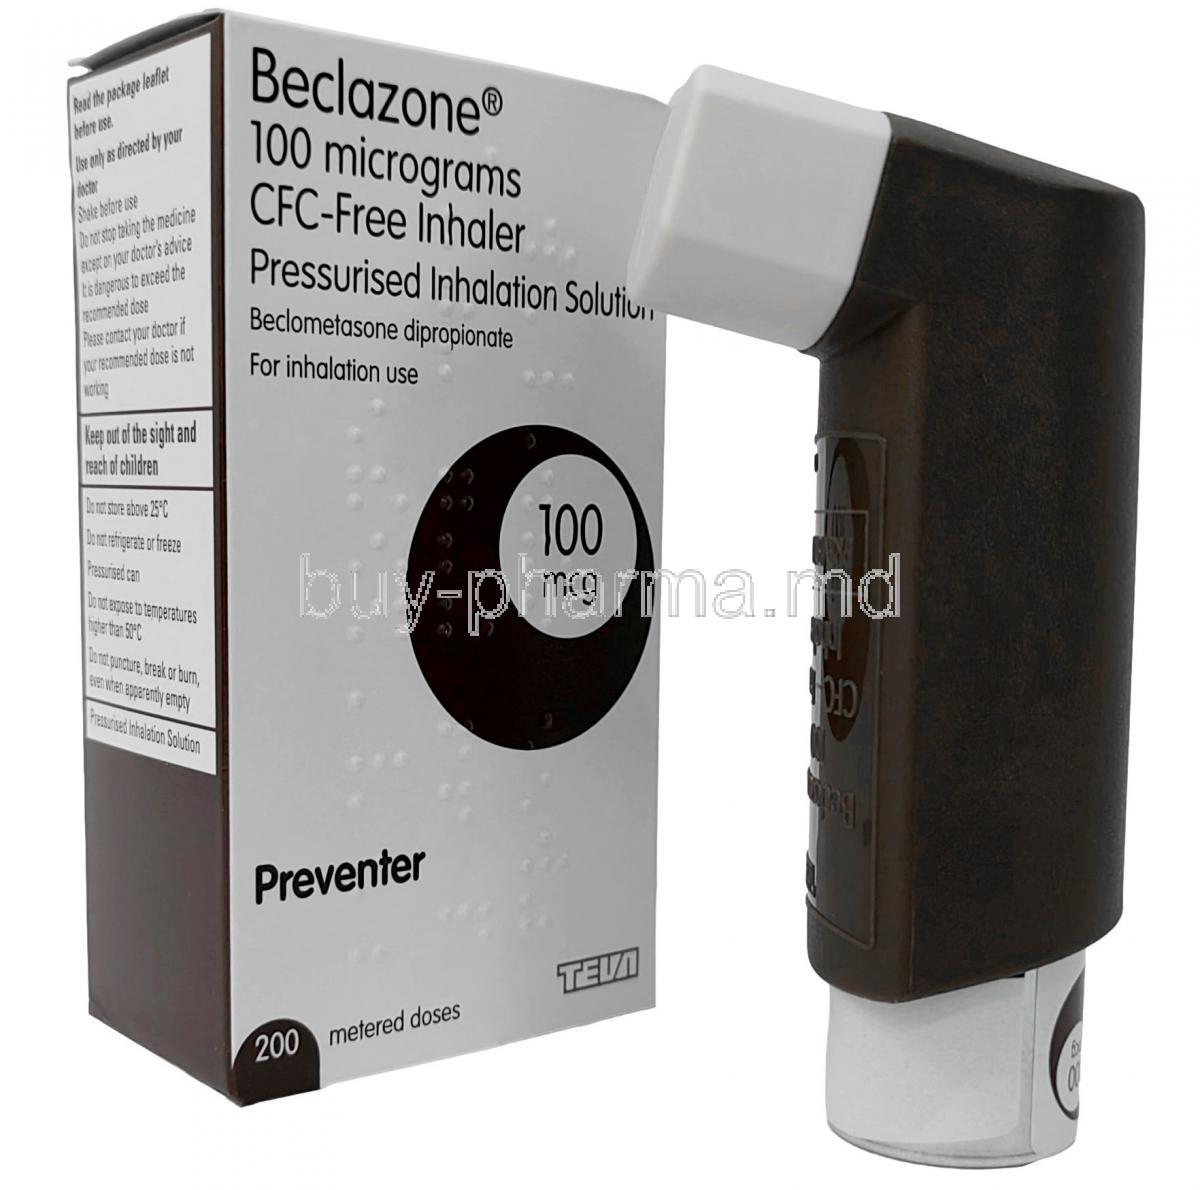 Beclazone, Beclomethasone Inhaler 200MD, box and inhaler pump